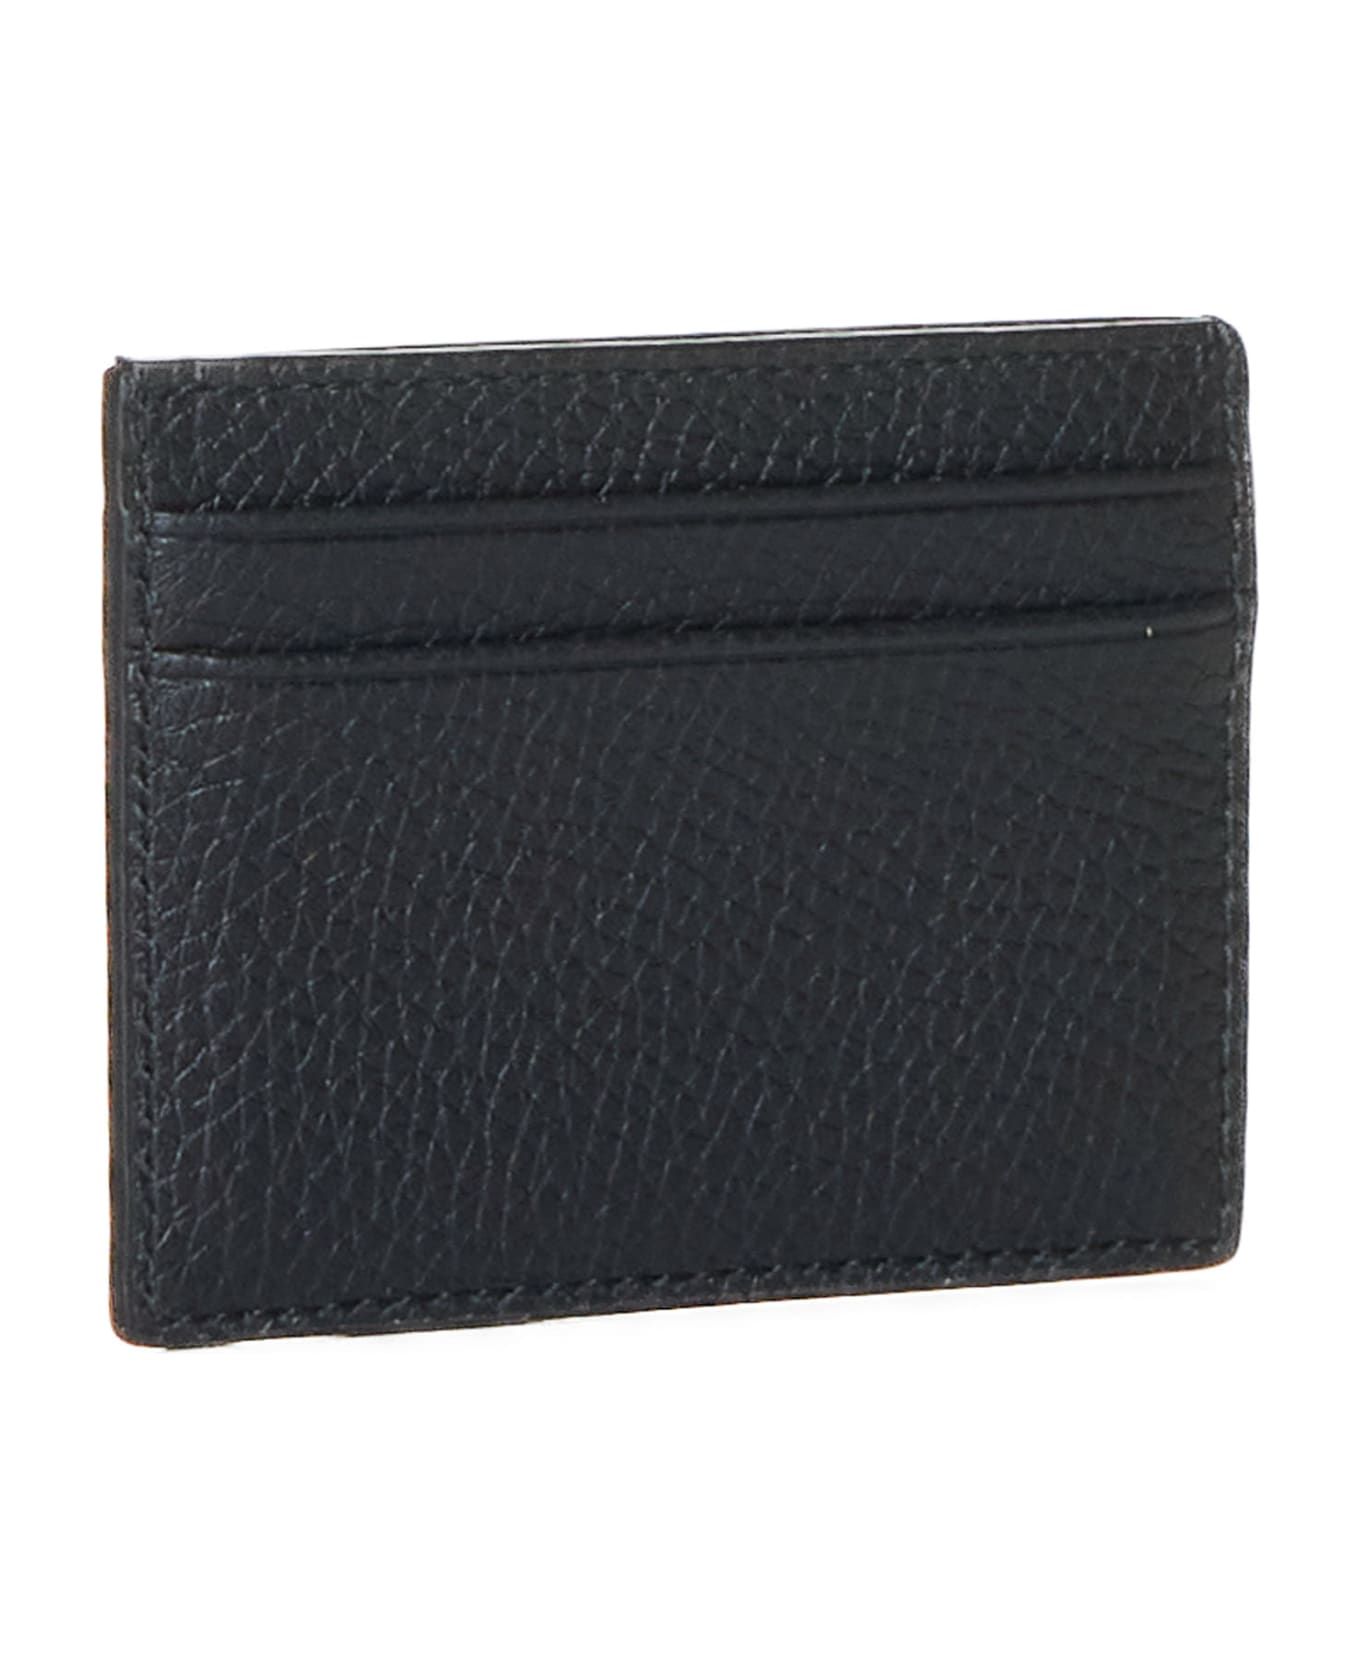 Bally Wallet - Whiteblack/ballyred+pall 財布